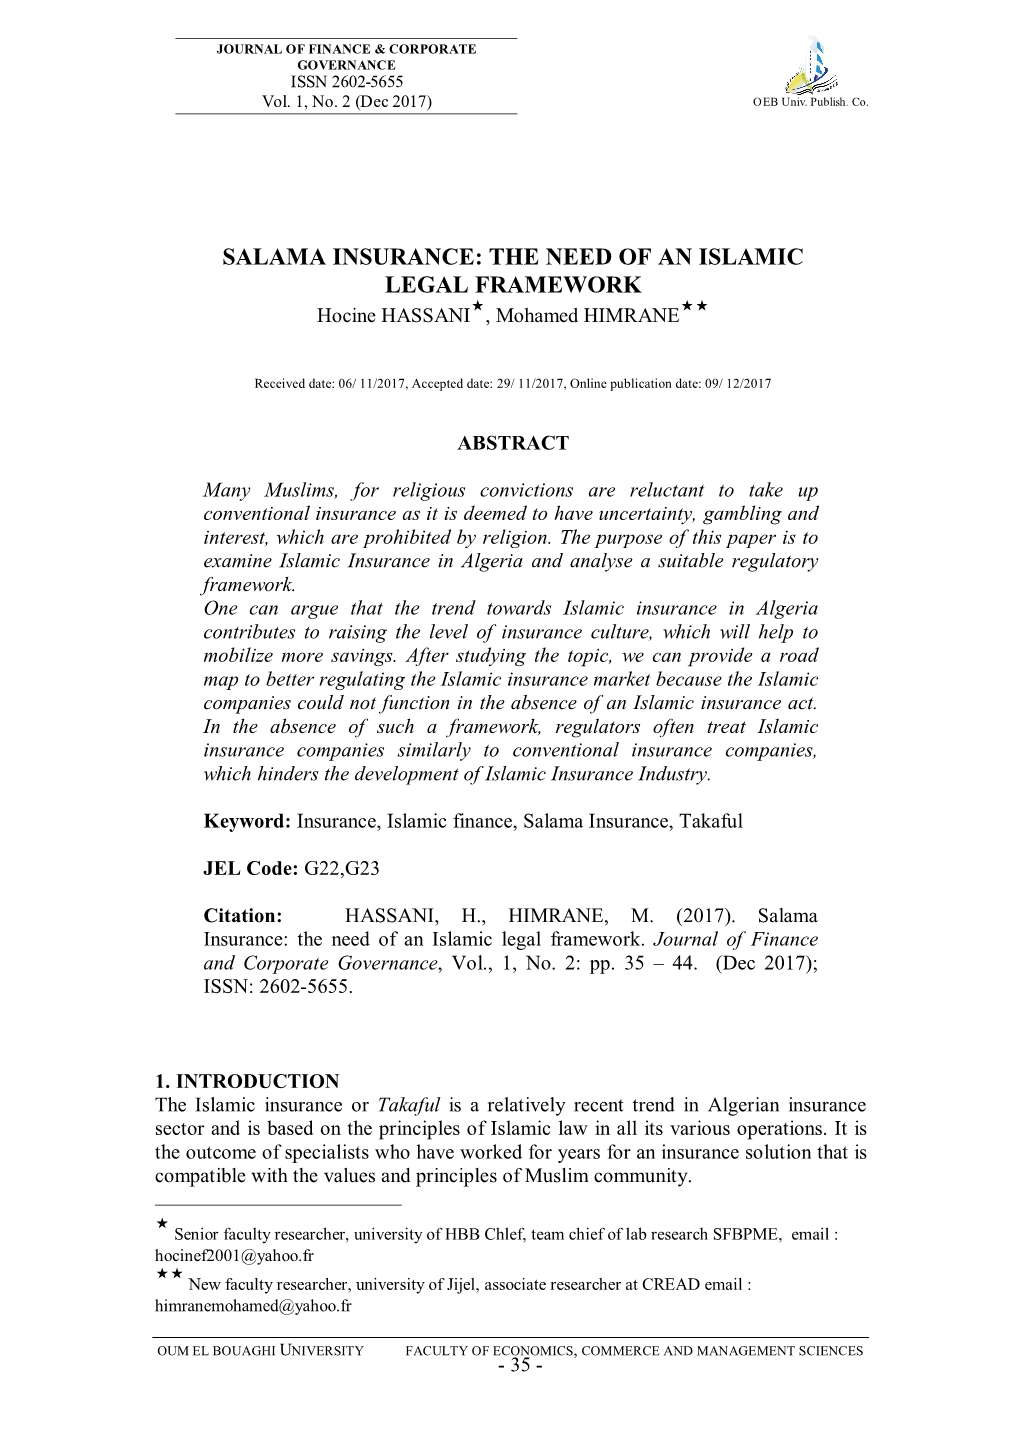 SALAMA INSURANCE: the NEED of an ISLAMIC LEGAL FRAMEWORK Hocine HASSANI, Mohamed HIMRANE